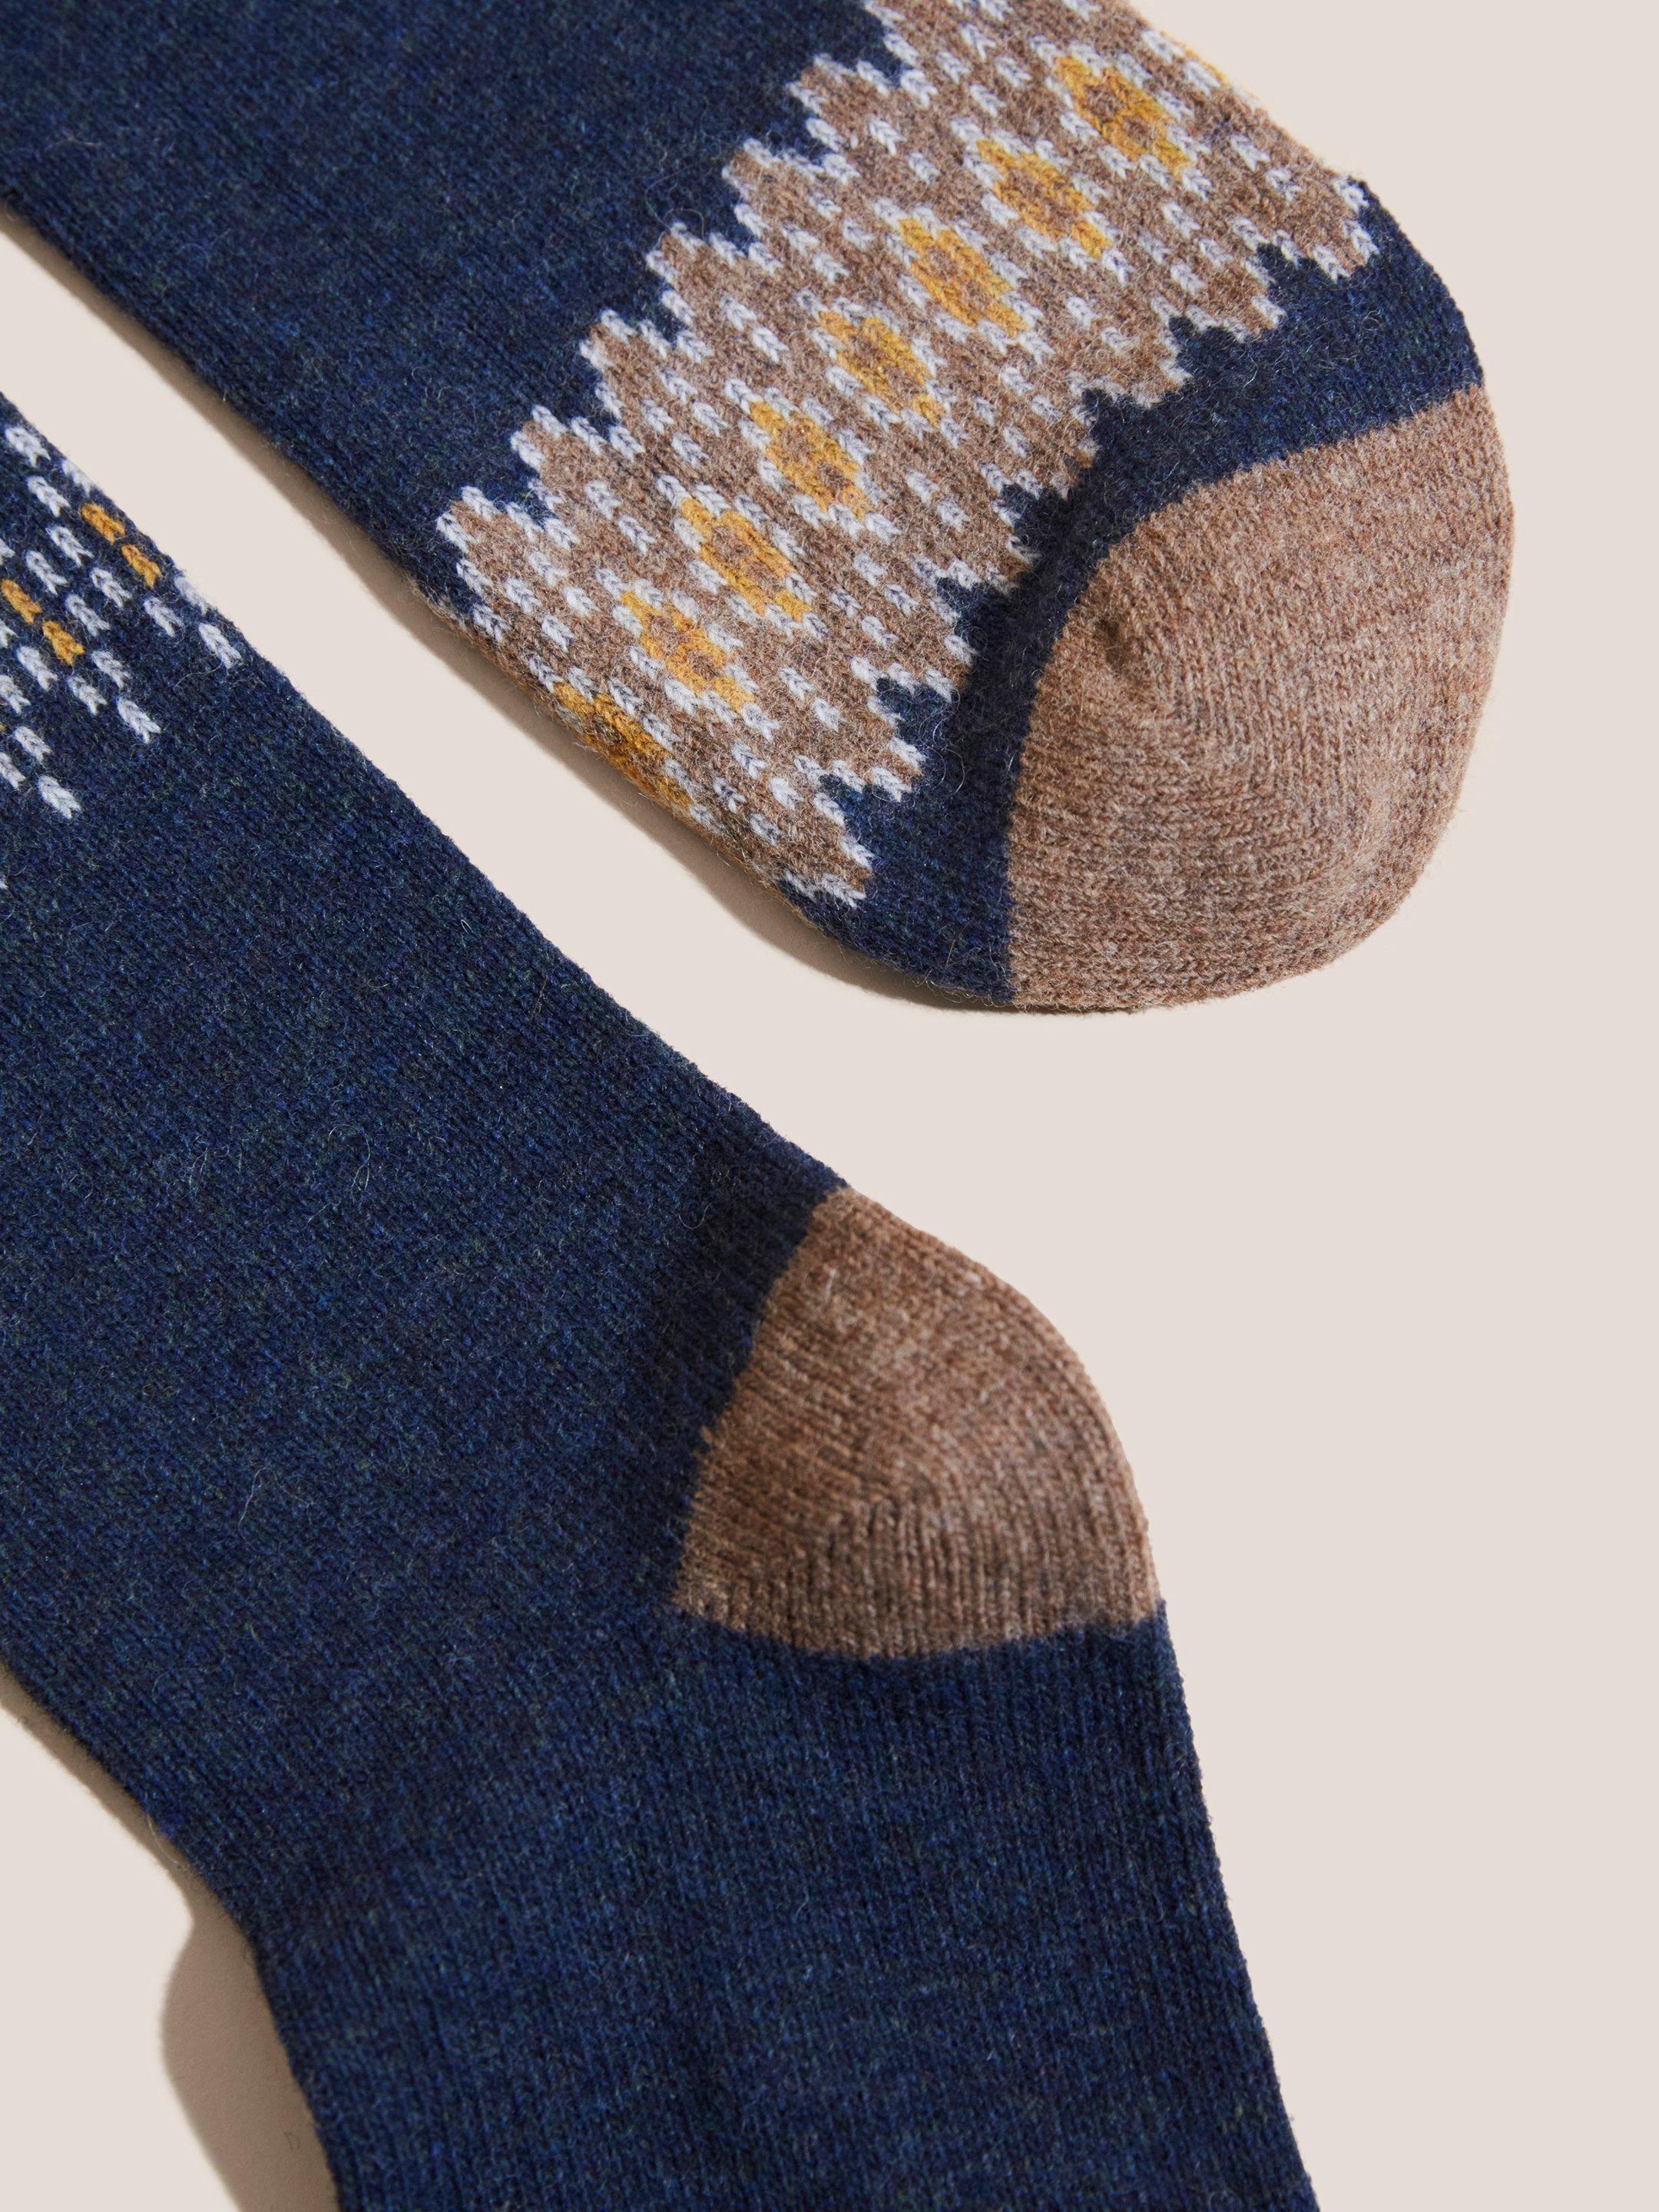 Fairisle Loopback Socks in NAVY MULTI - FLAT DETAIL